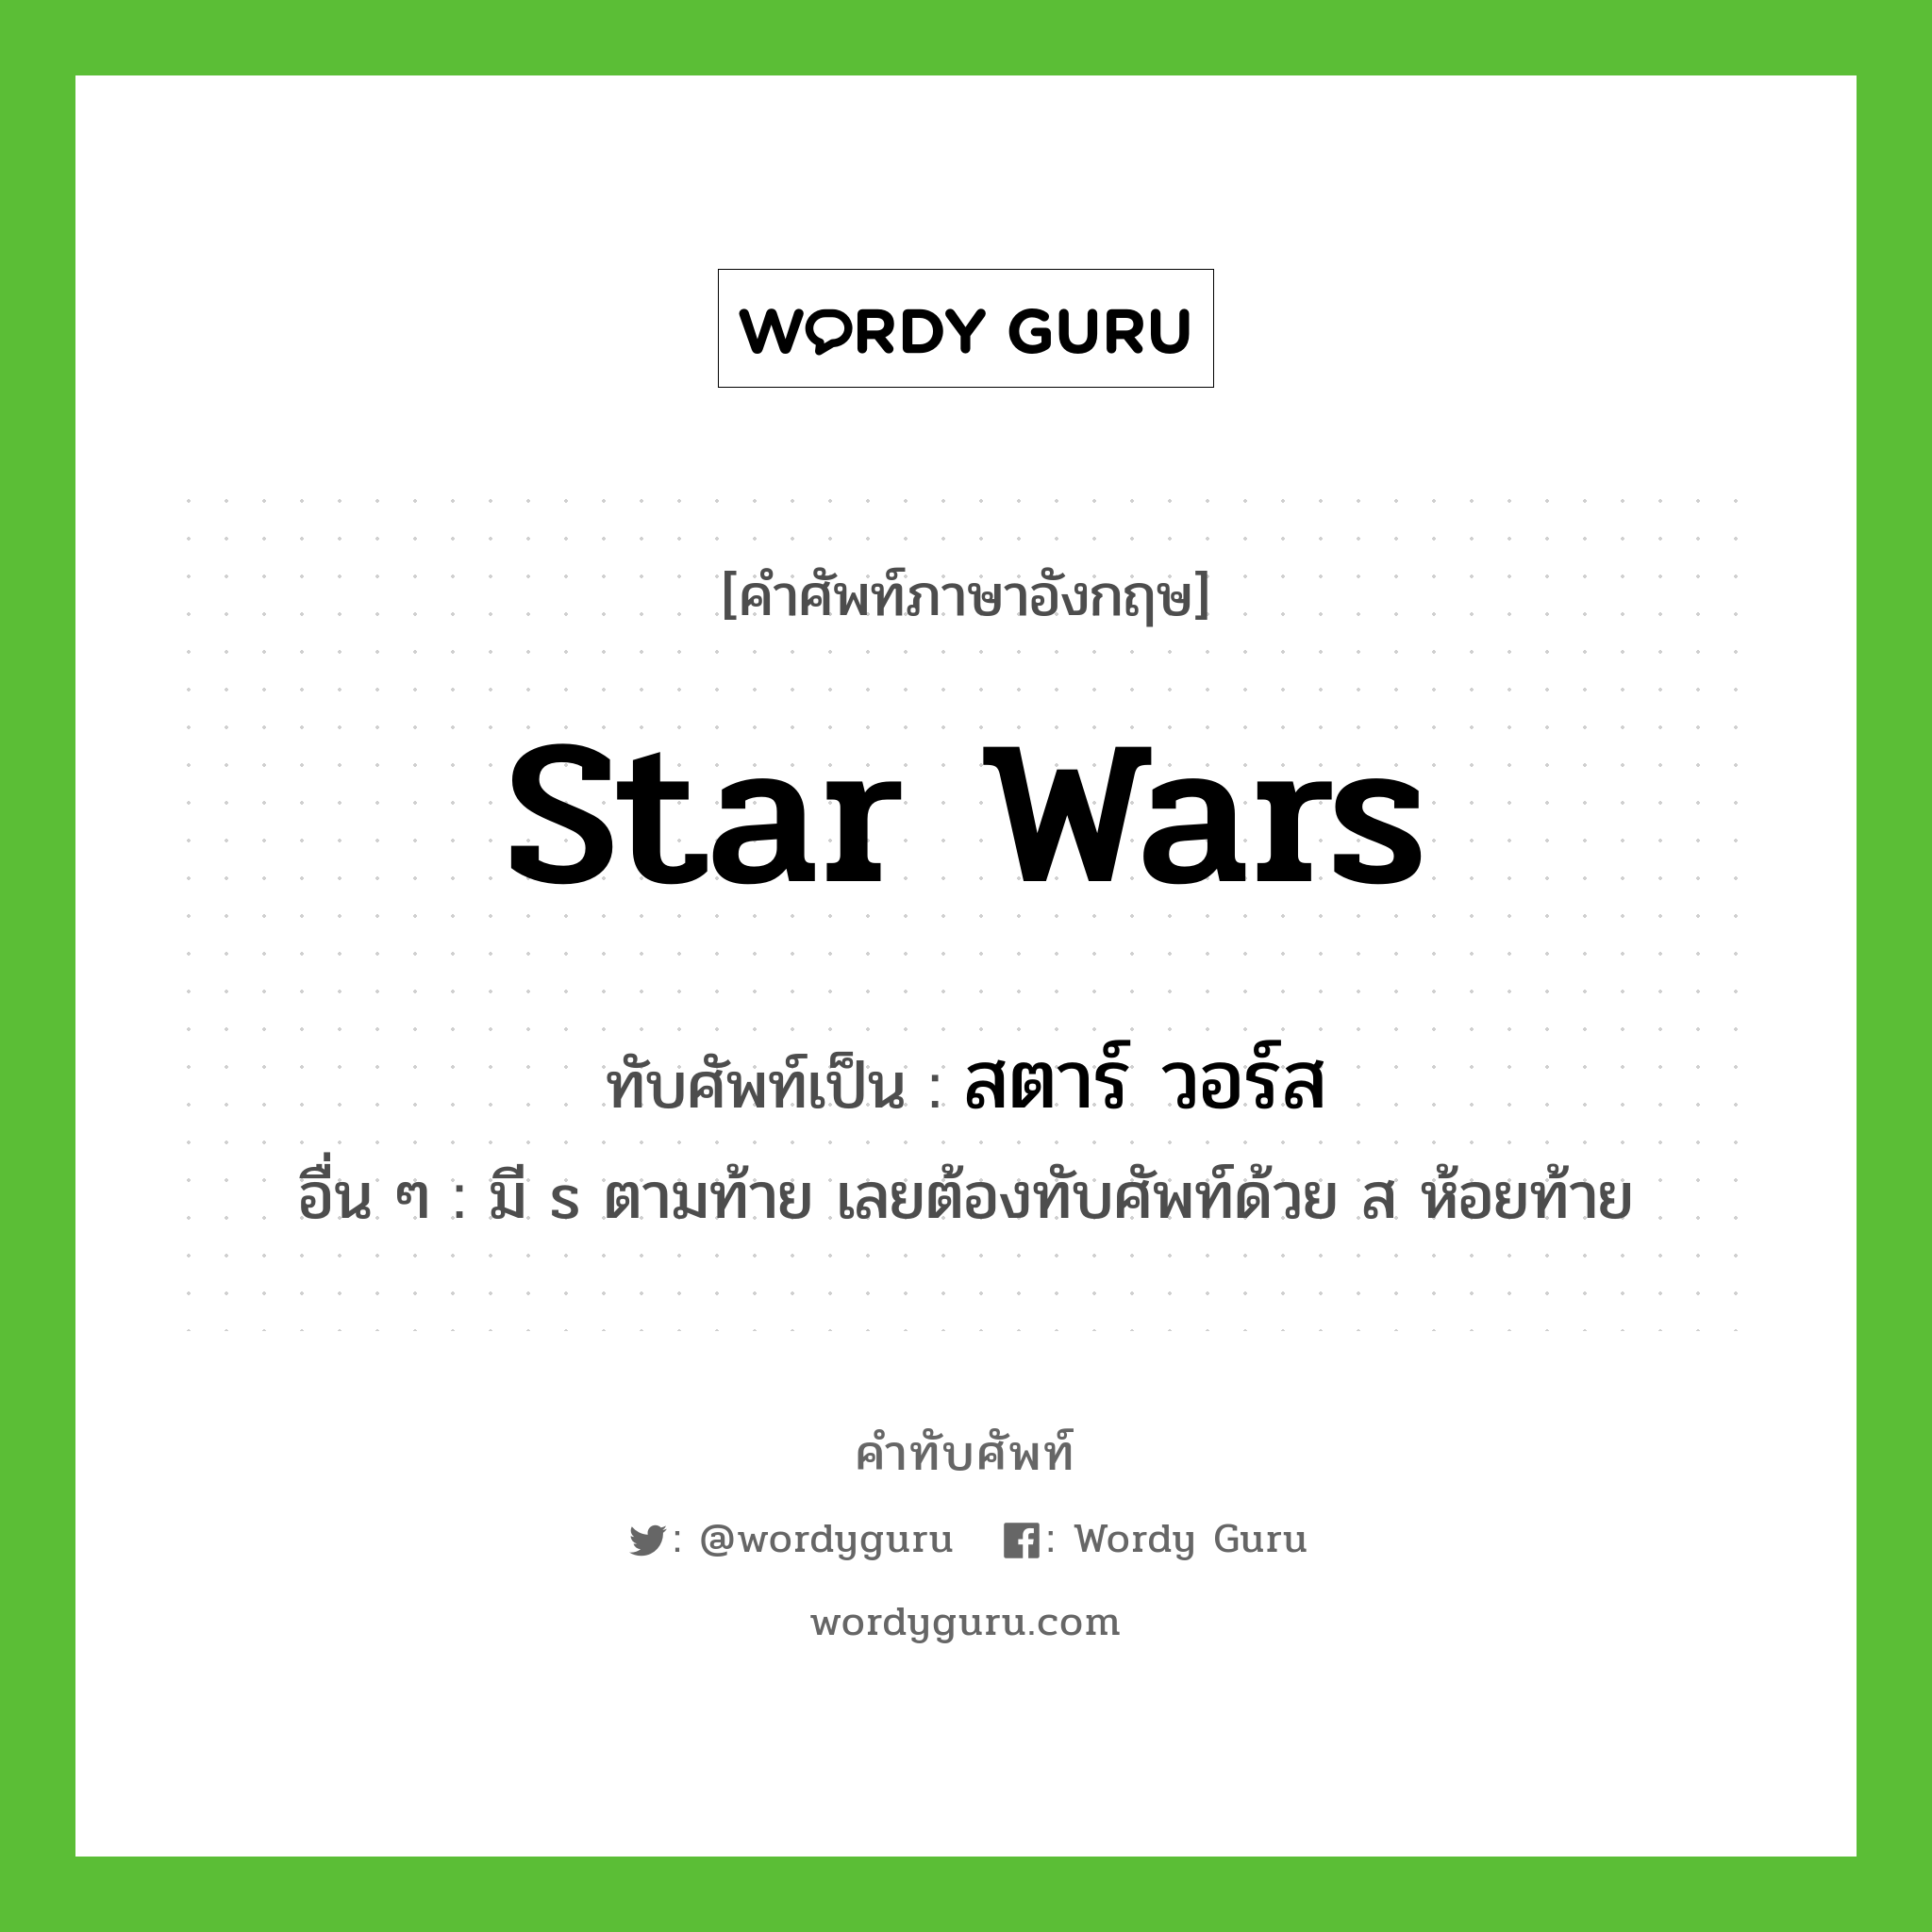 Star Wars เขียนเป็นคำไทยว่าอะไร?, คำศัพท์ภาษาอังกฤษ Star Wars ทับศัพท์เป็น สตาร์ วอร์ส อื่น ๆ มี s ตามท้าย เลยต้องทับศัพท์ด้วย ส ห้อยท้าย